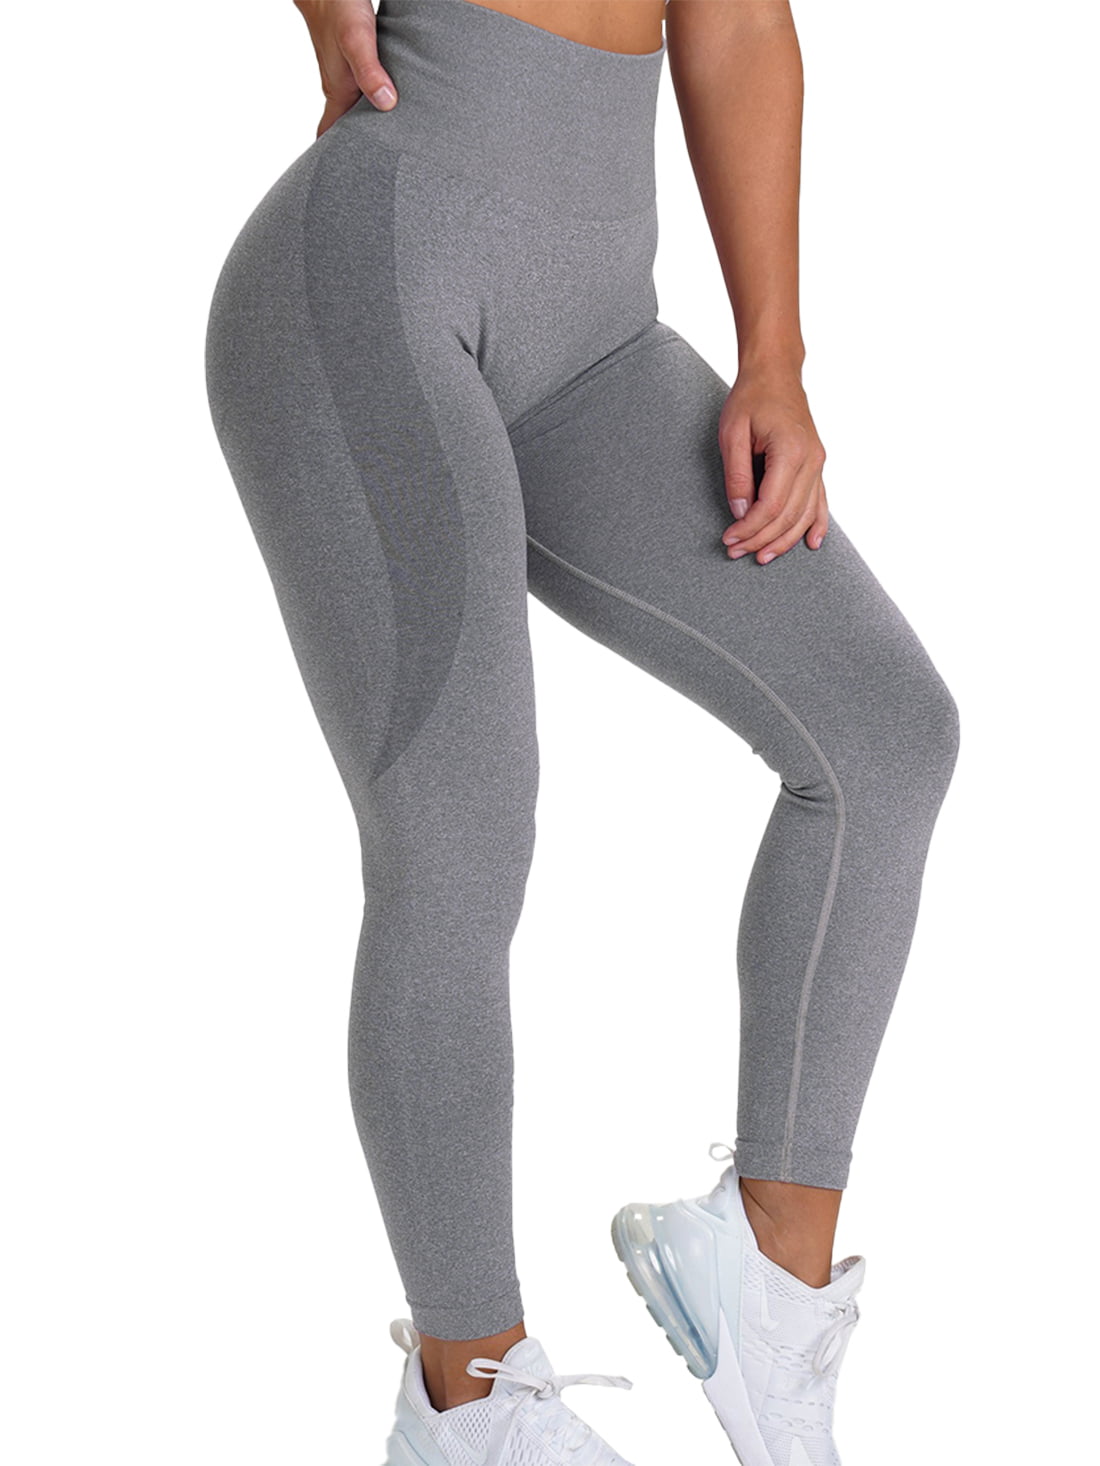 VASLANDA Womens Seamless Leggings High Waisted Workout Tight Leggings Gym  Yoga Pants Tummy Control Sports Compression 